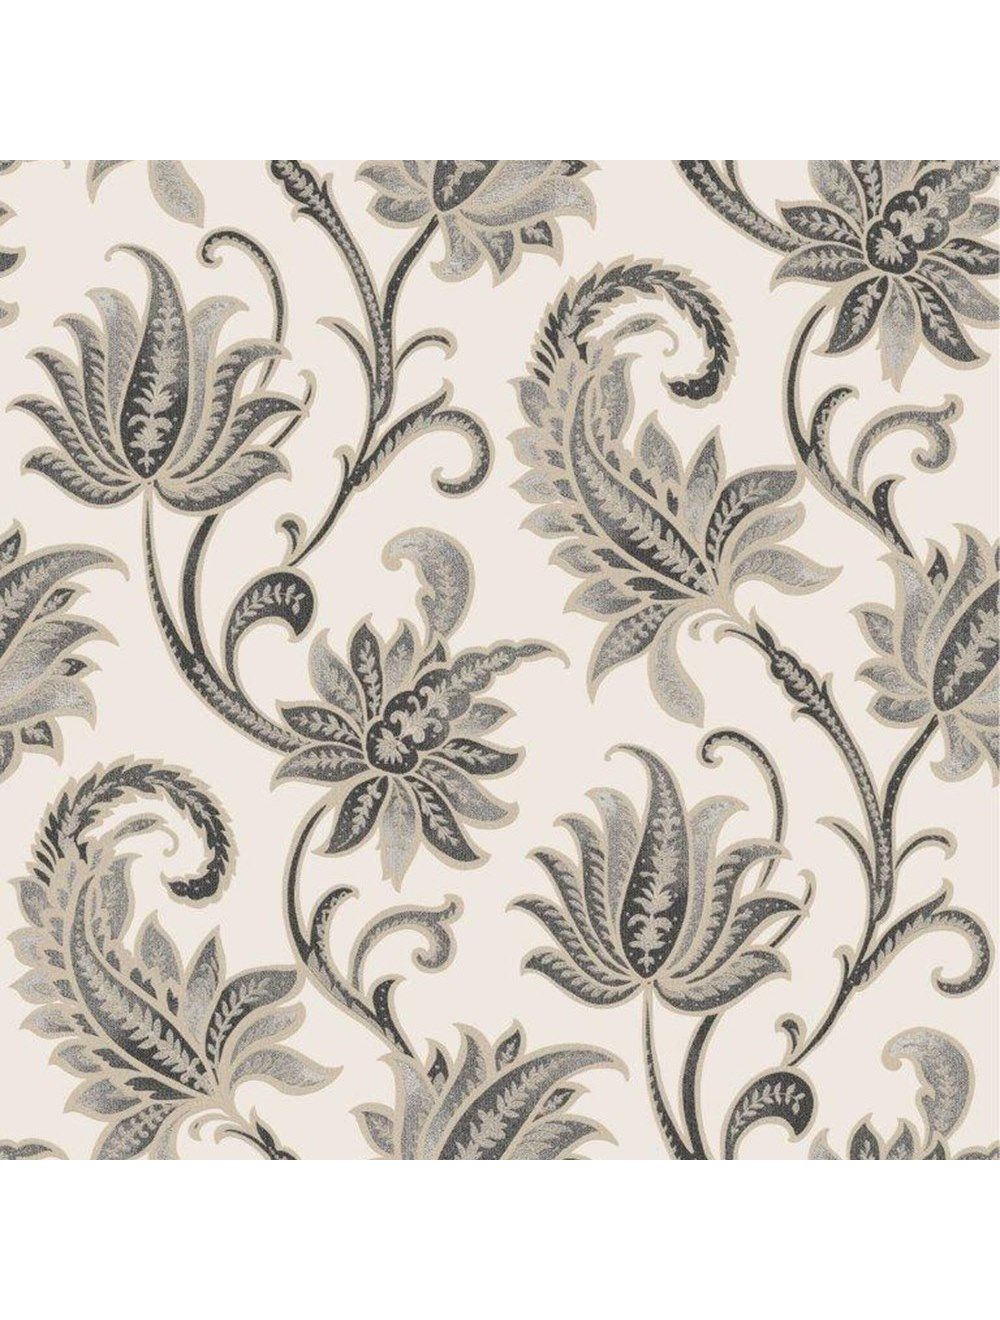 Rasch Sorrento Neoclassical Black Cream Wallpaper 519303 - DecorSave  Wallpapers